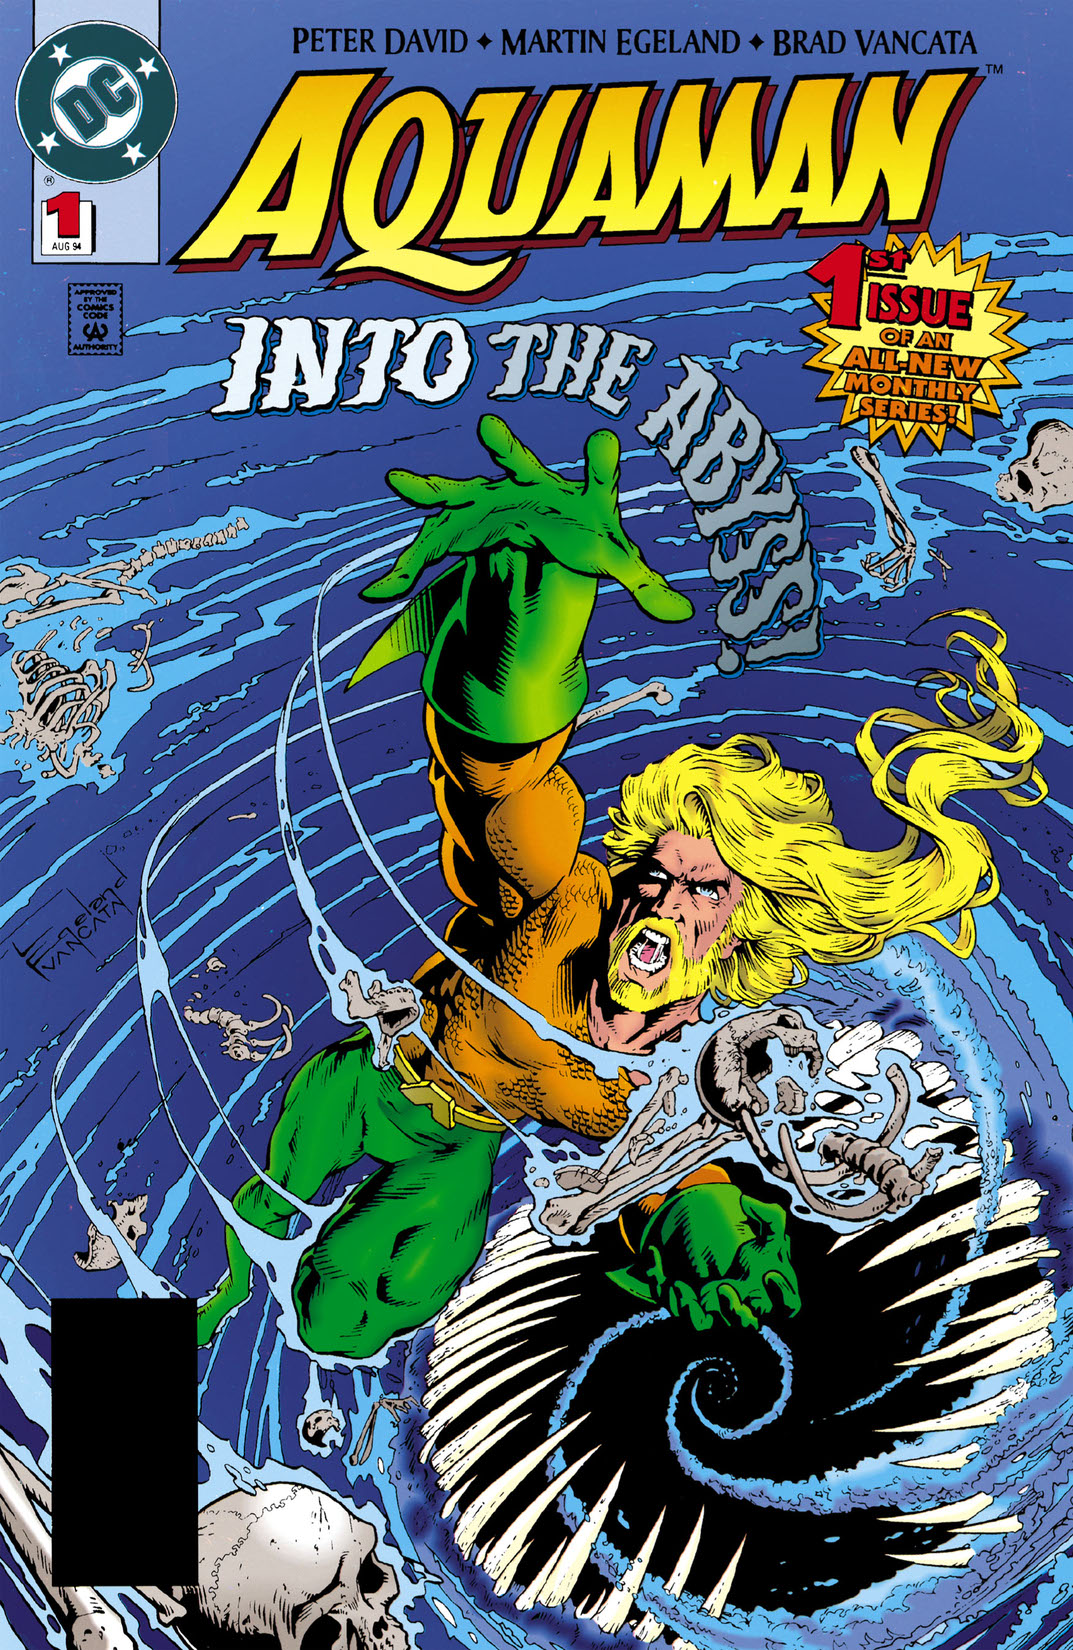 Aquaman (1994-) #1 preview images